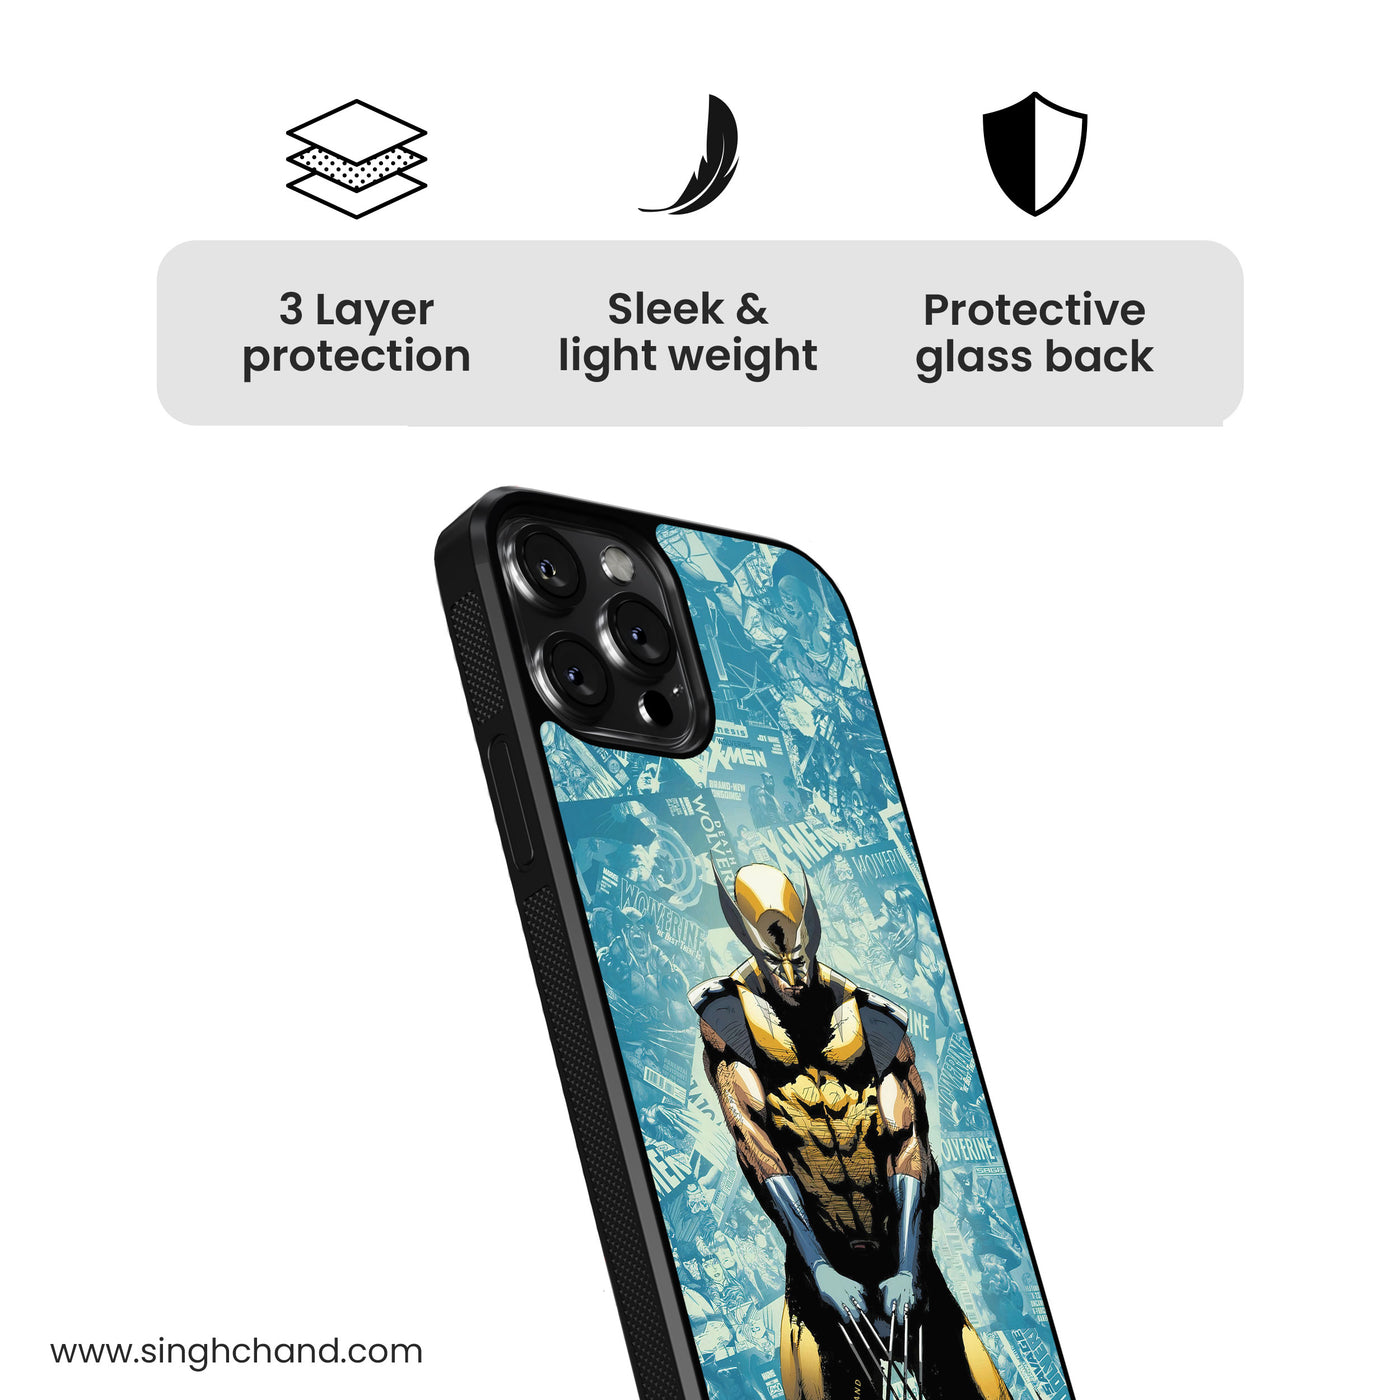 Wolverine Glass Phone Case